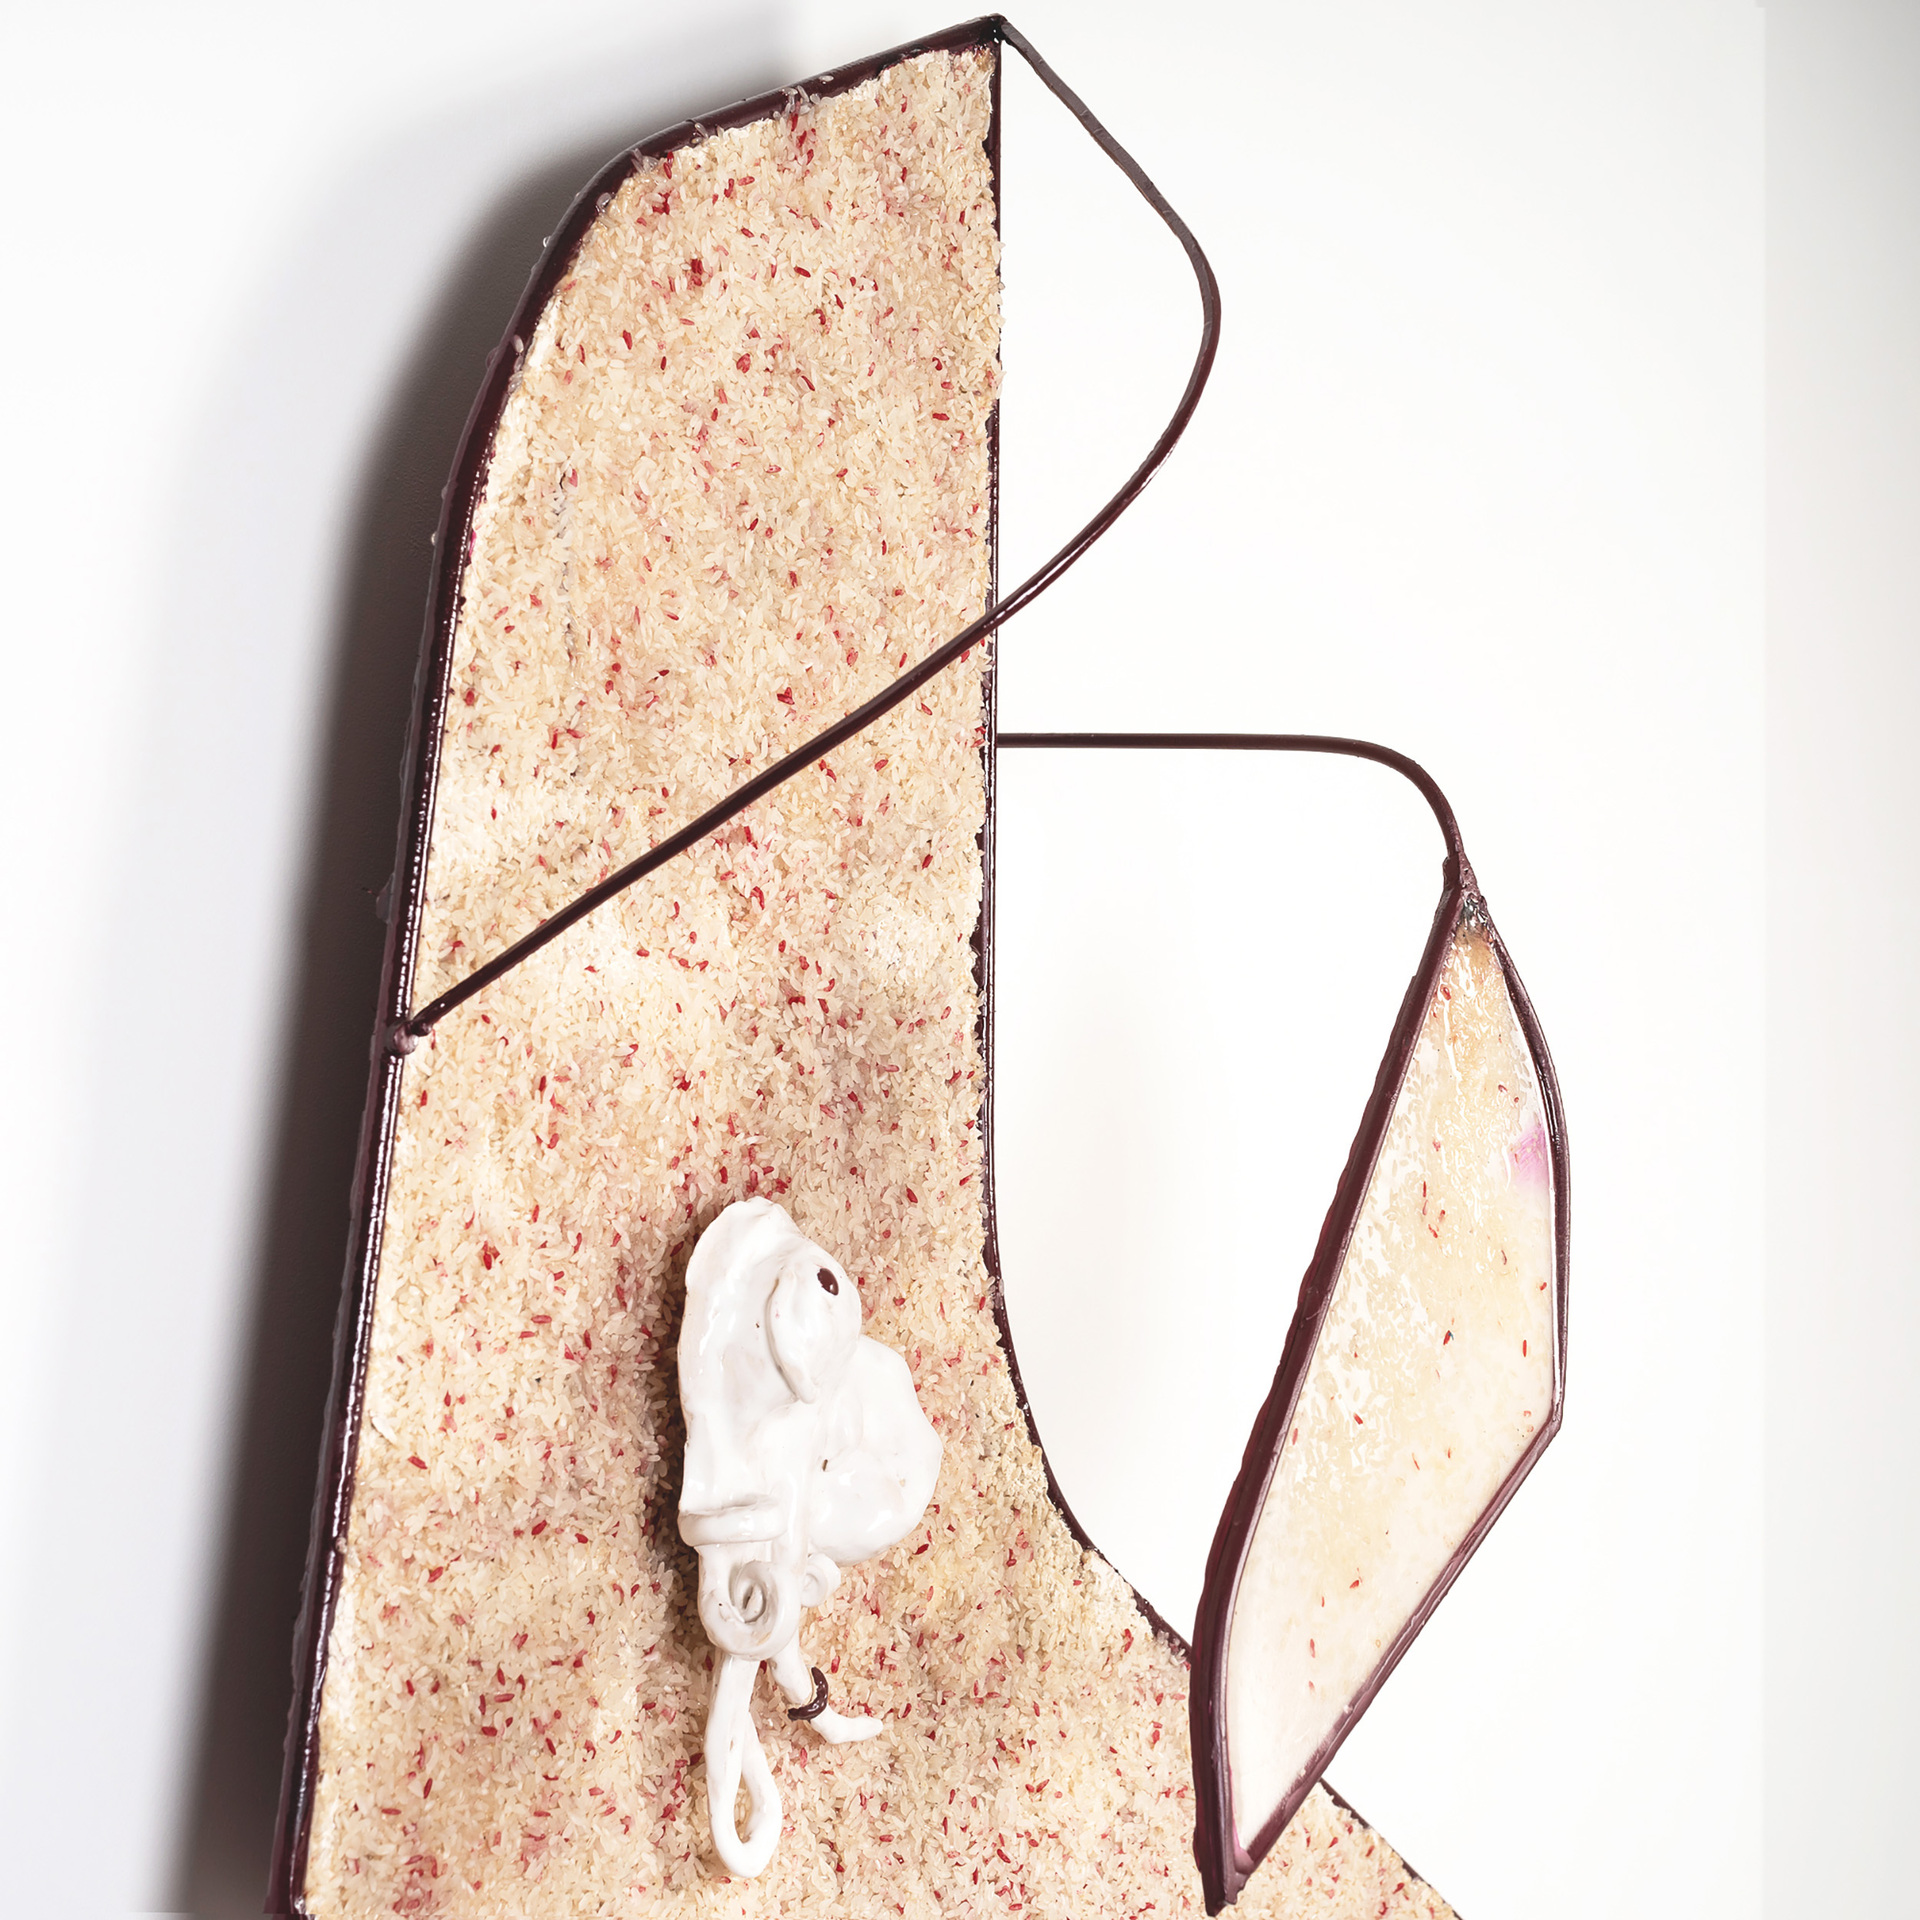 Romain Vicari, LES MOUSES, 2020, Steel, plaster, rice, 180/70/10 cm. (detail)